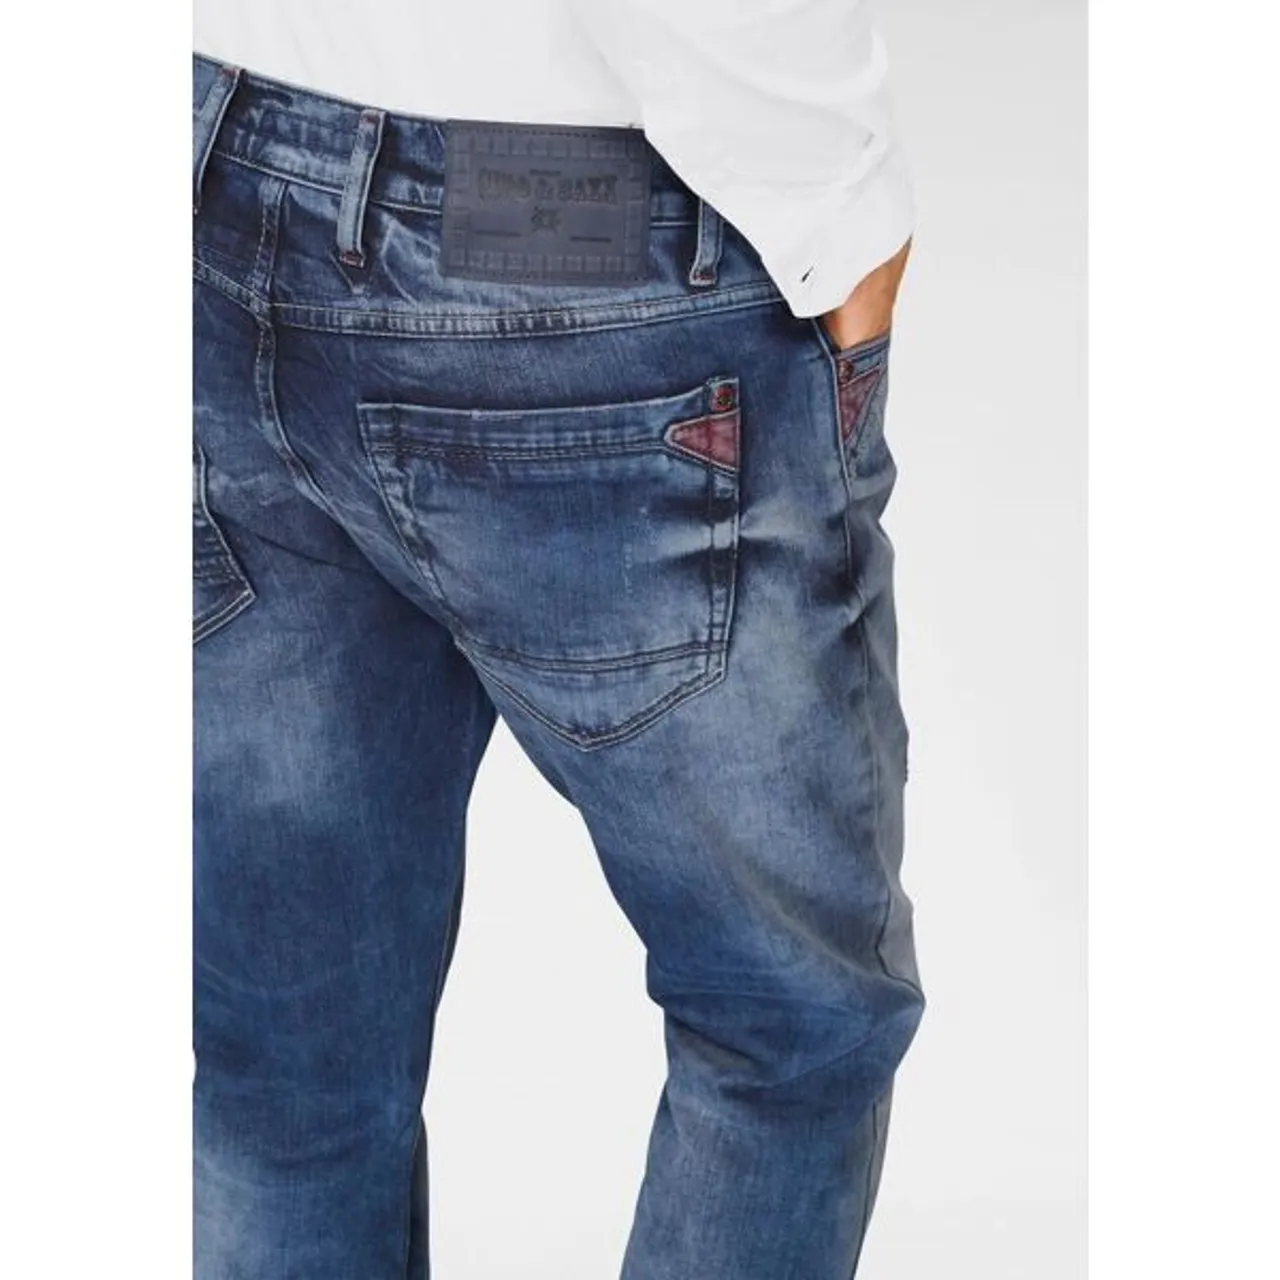 Straight-Jeans CIPO & BAXX "Red Dot" Gr. 40, Länge 34, blau (blue used) Herren Jeans Straight Fit